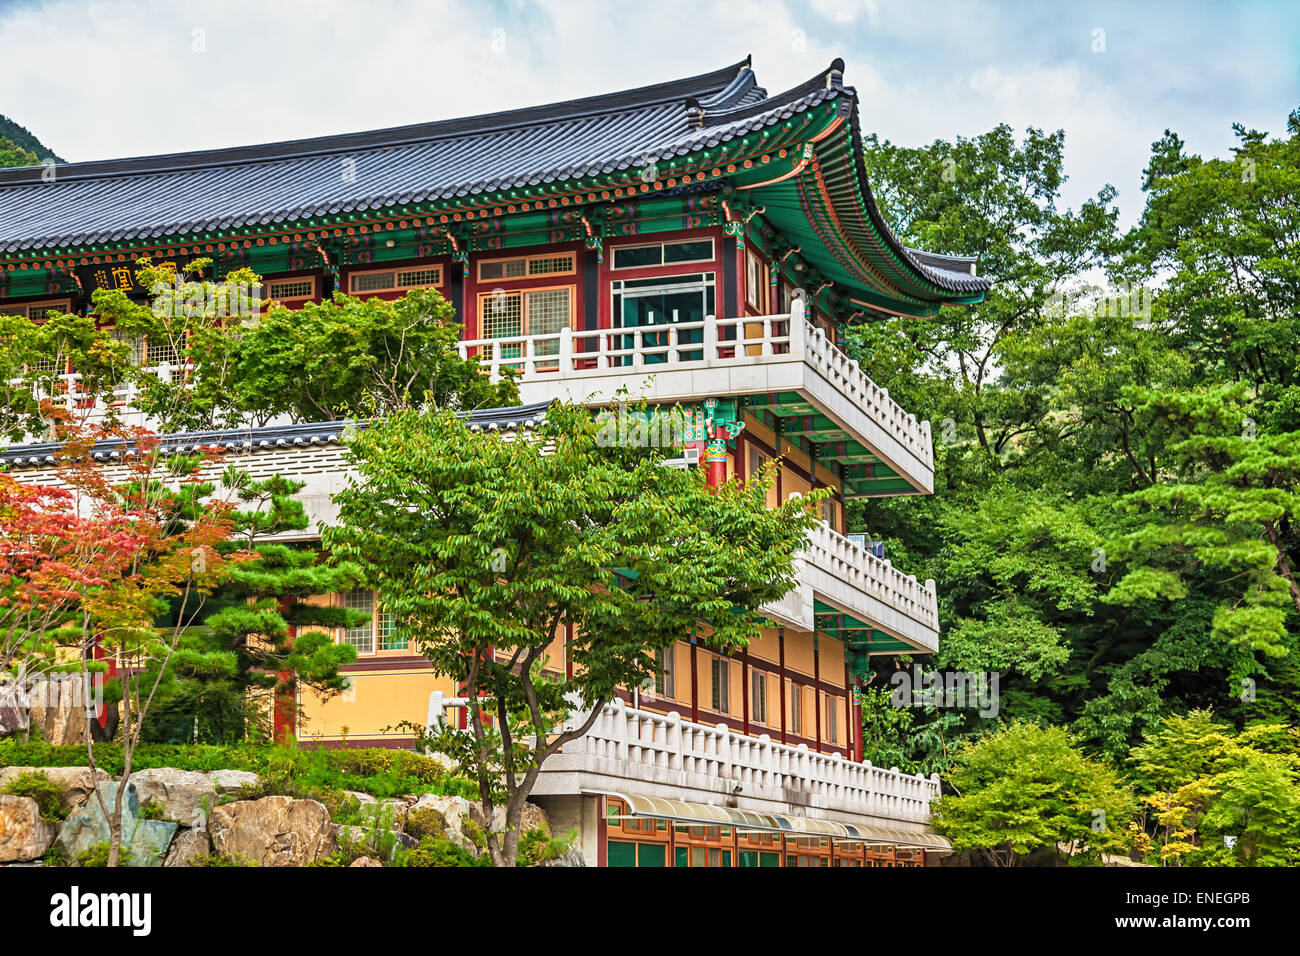 Antiguo Edificio de arquitectura tradicional coreano o monjes templo en Corea del Sur Foto de stock